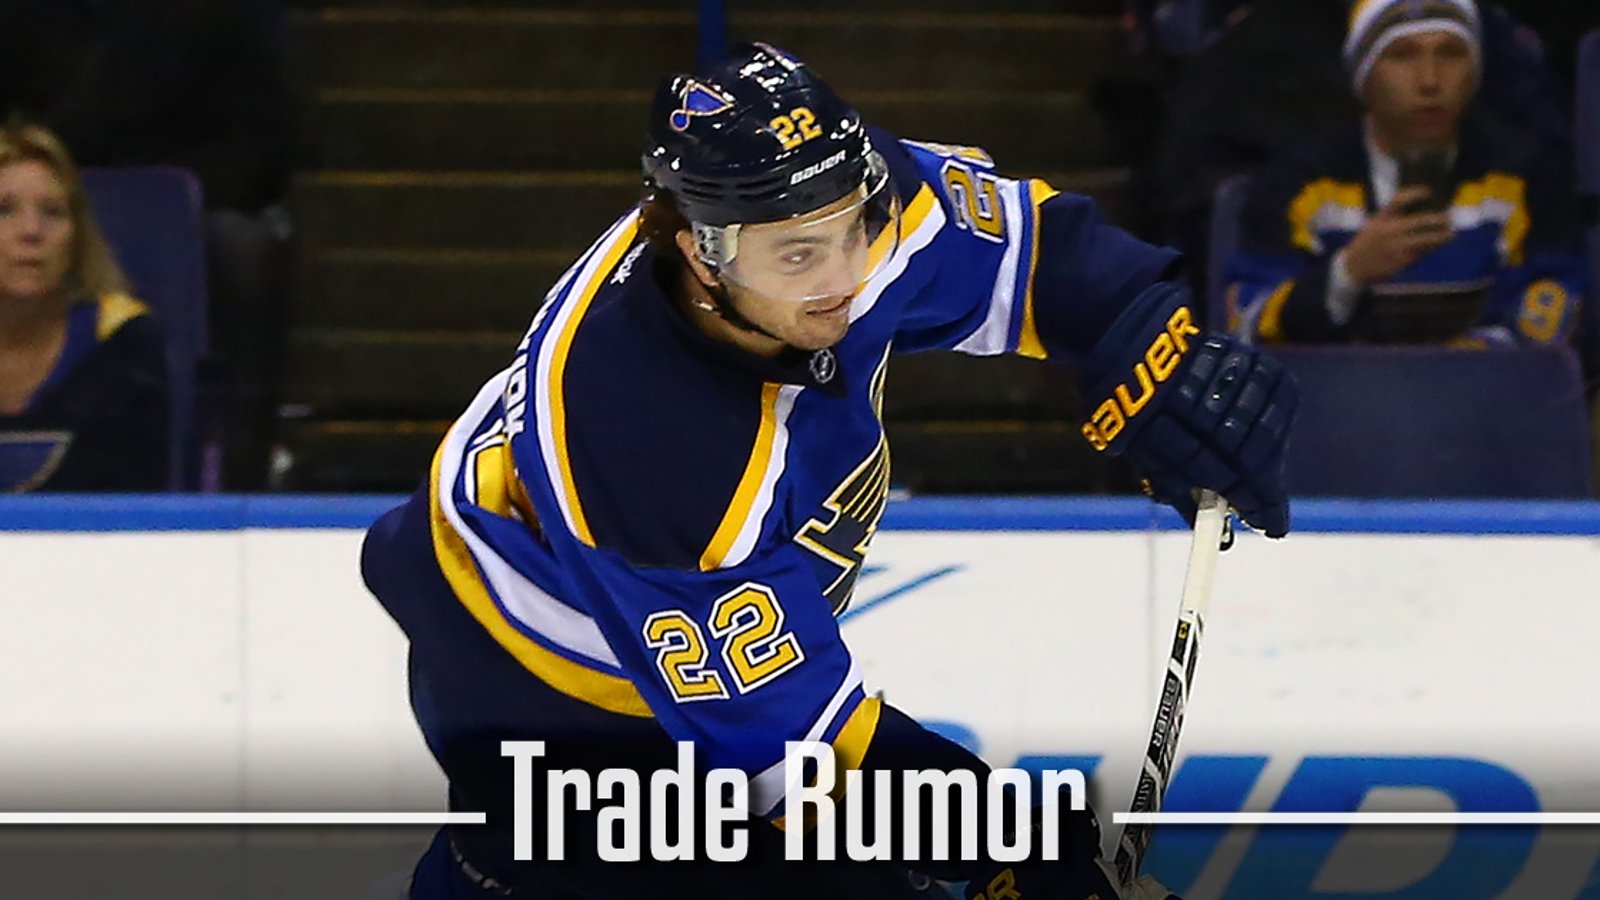 Trade Rumor : Major update regarding Kevin Shattenkirk